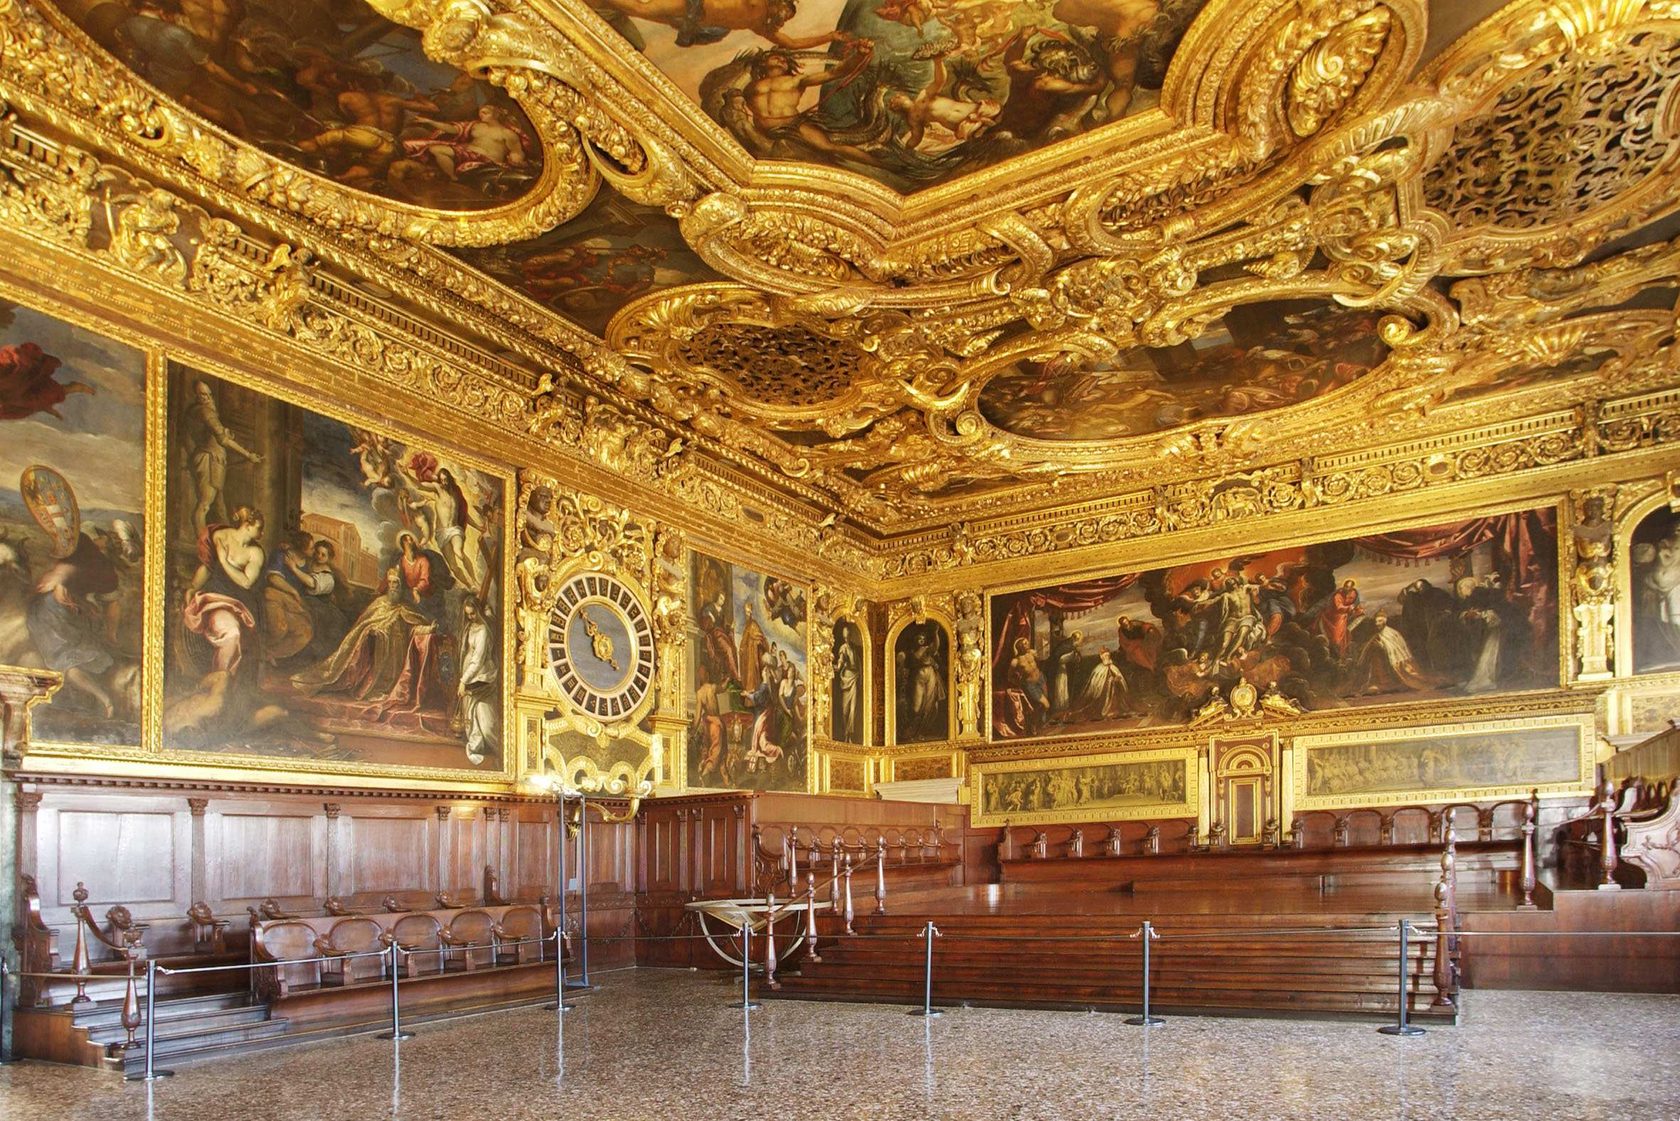 дворец дож в венеции